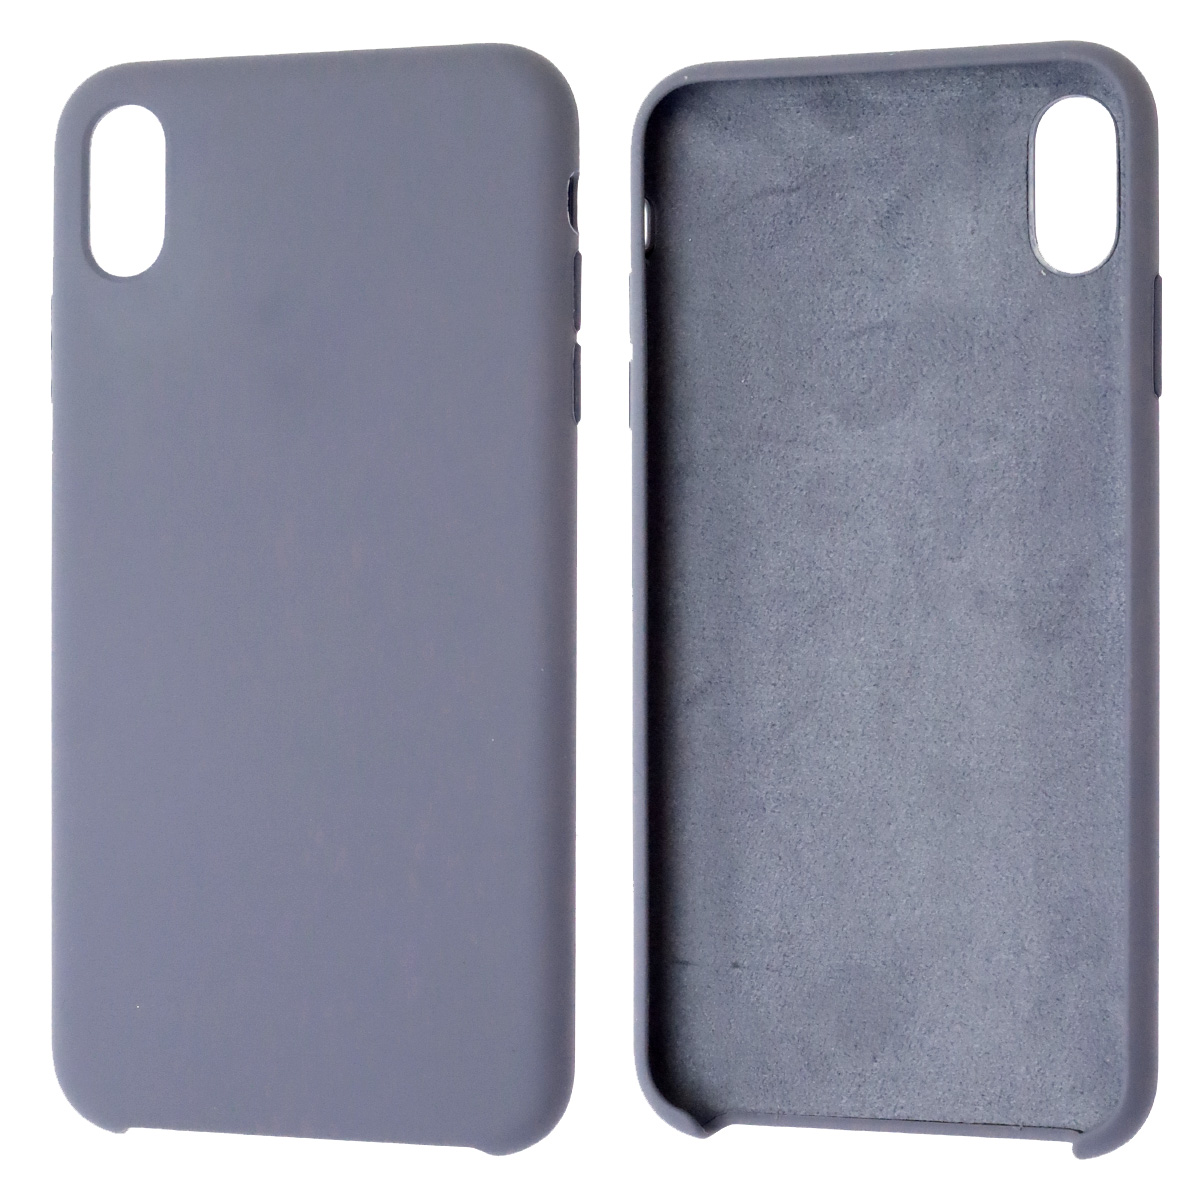 Чехол накладка Silicon Case для APPLE iPhone XS MAX, силикон, бархат, цвет серый